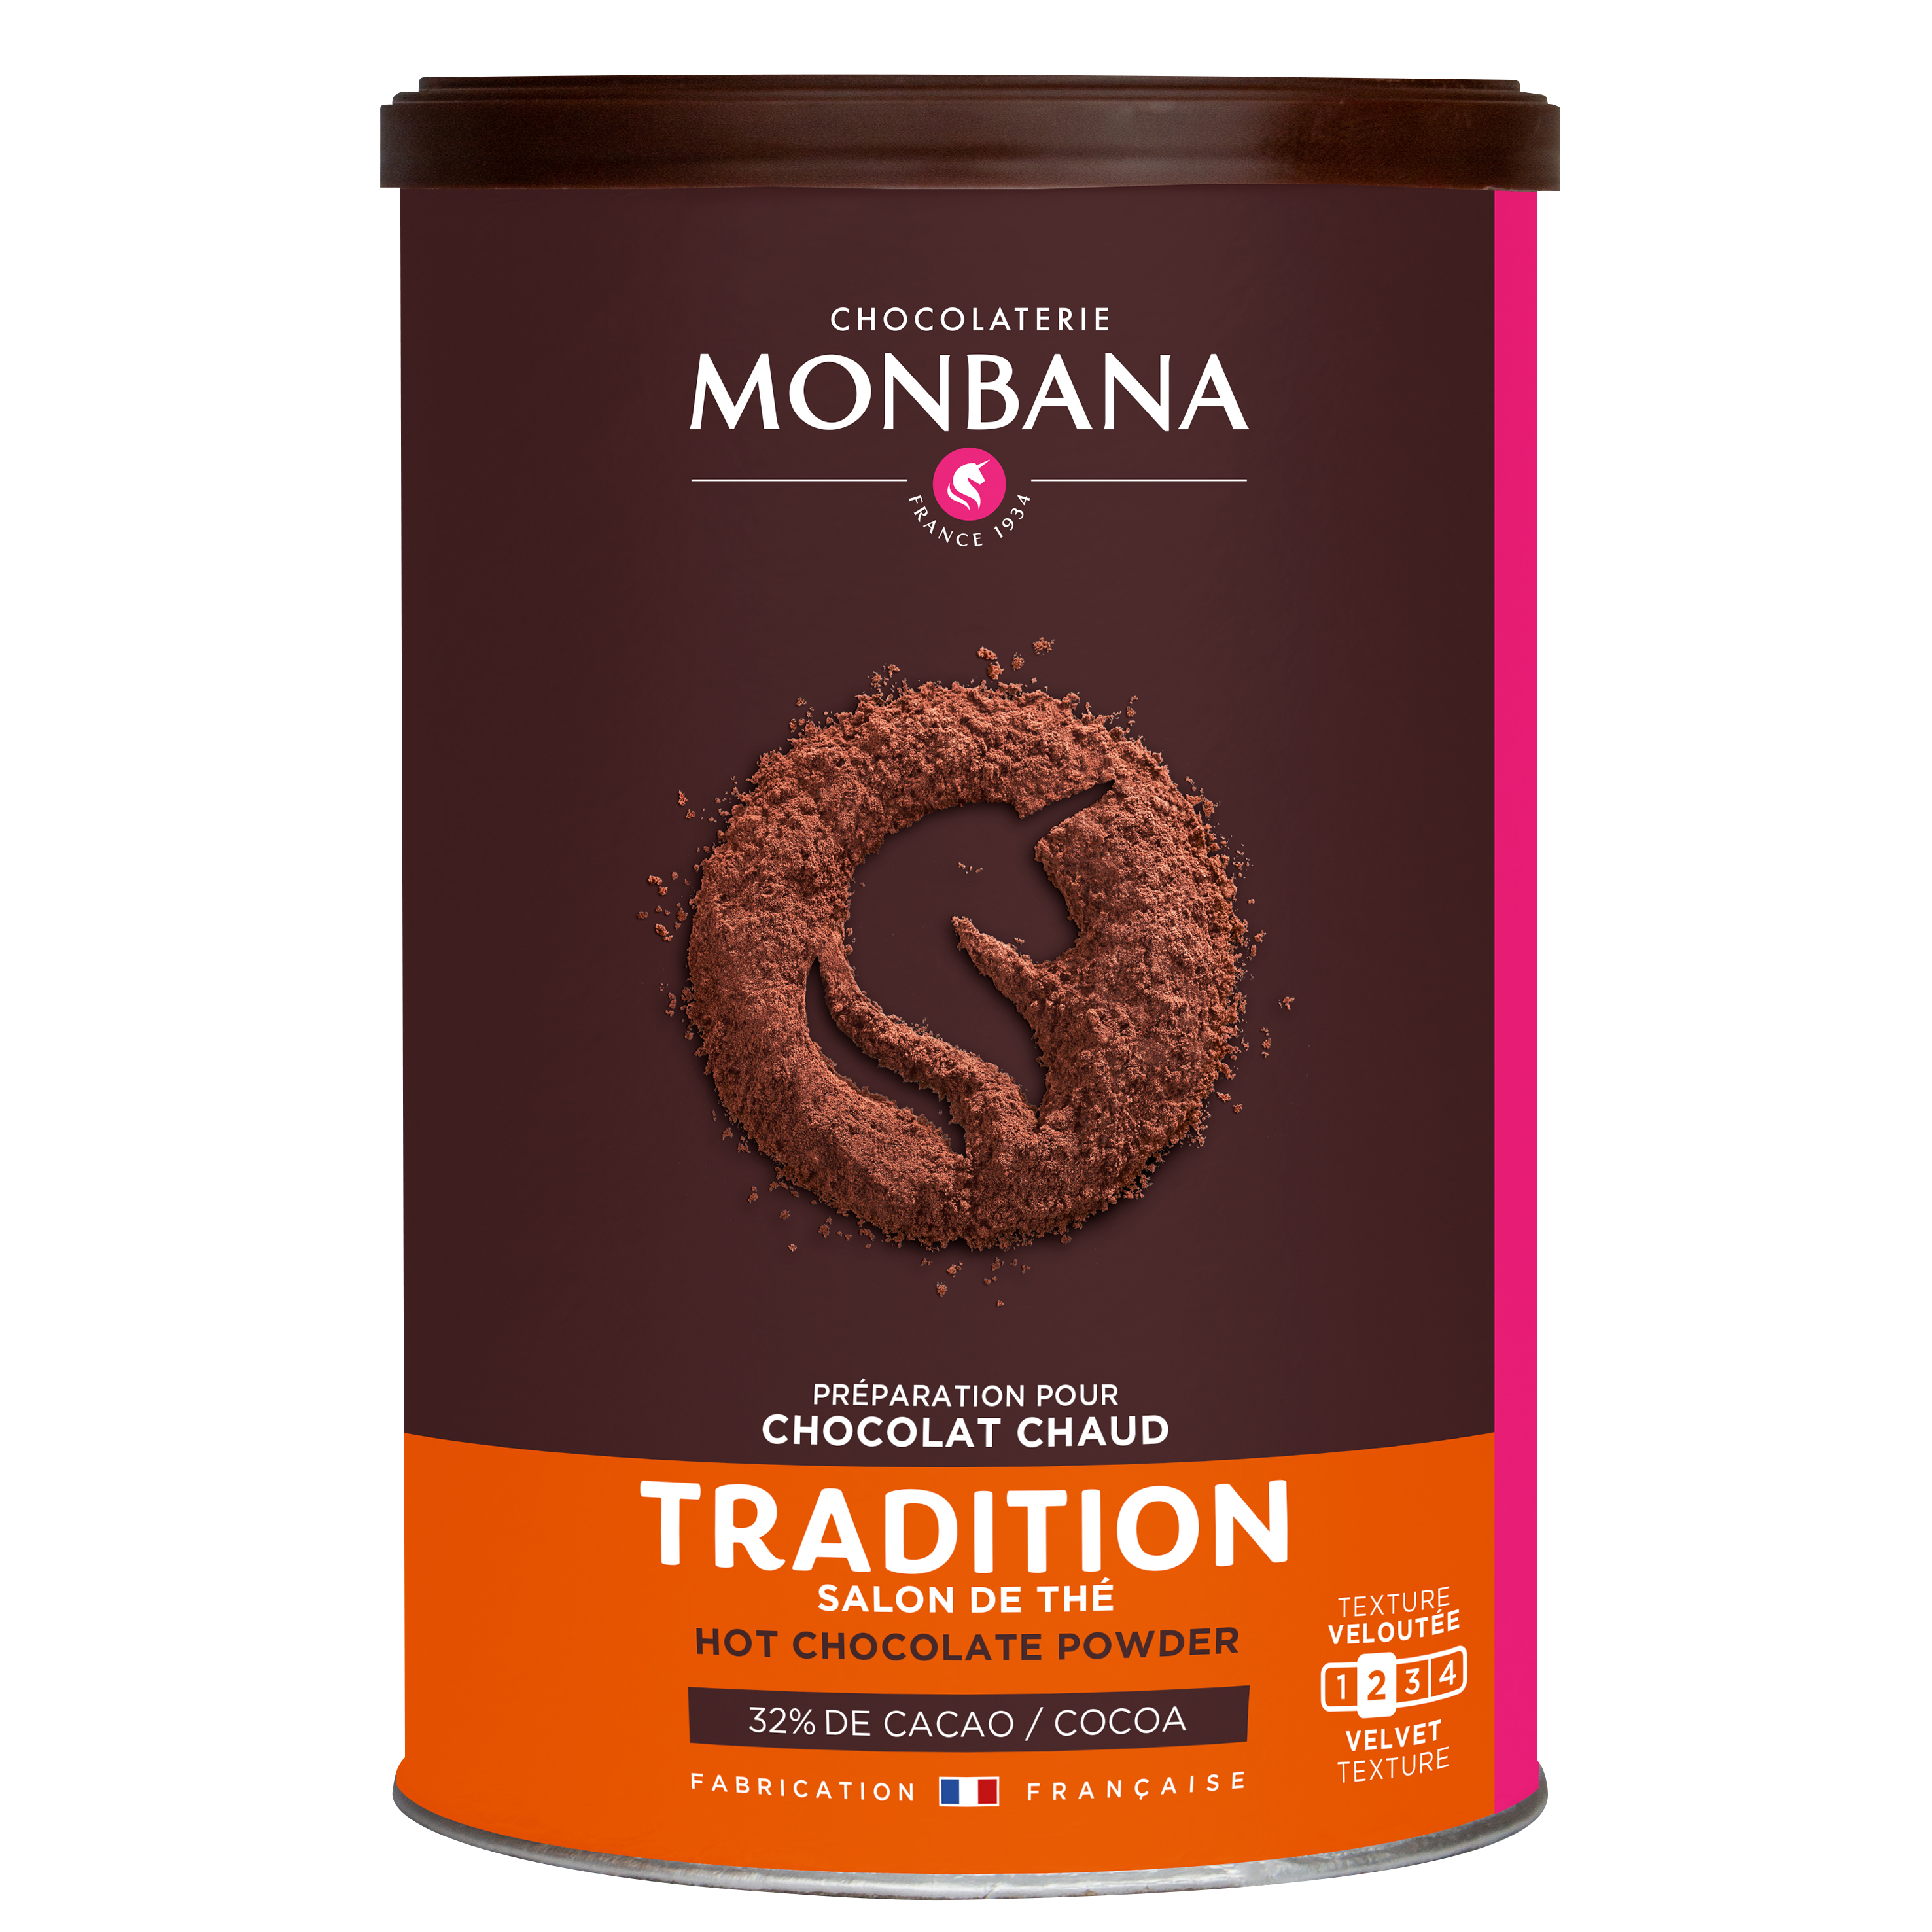 »Tradition« Chocolate Powder